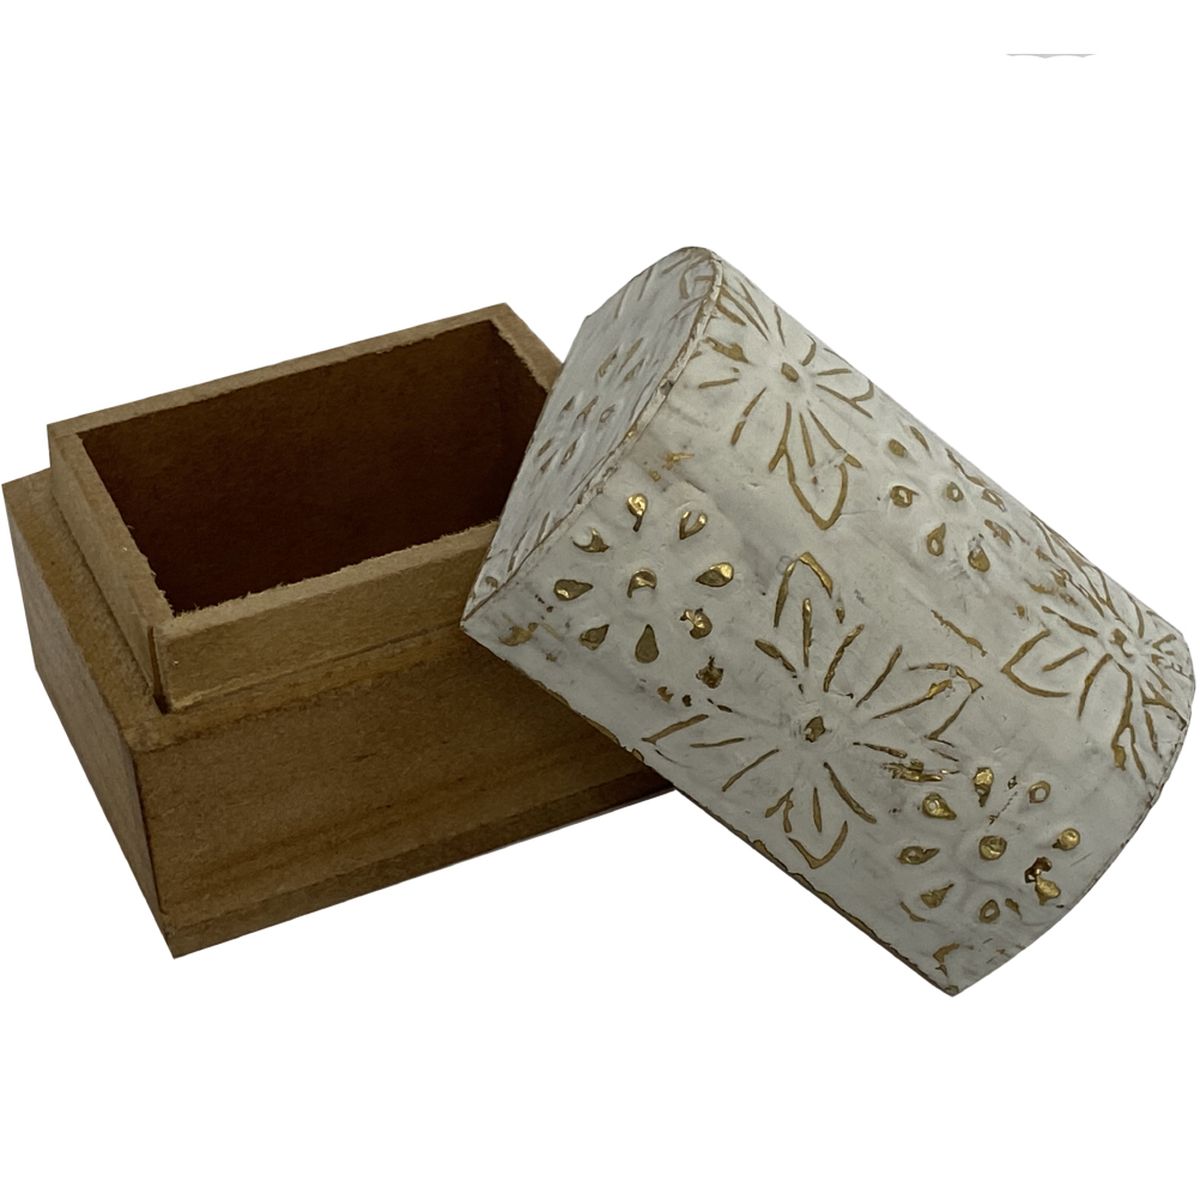 Mini White and natural wooden box